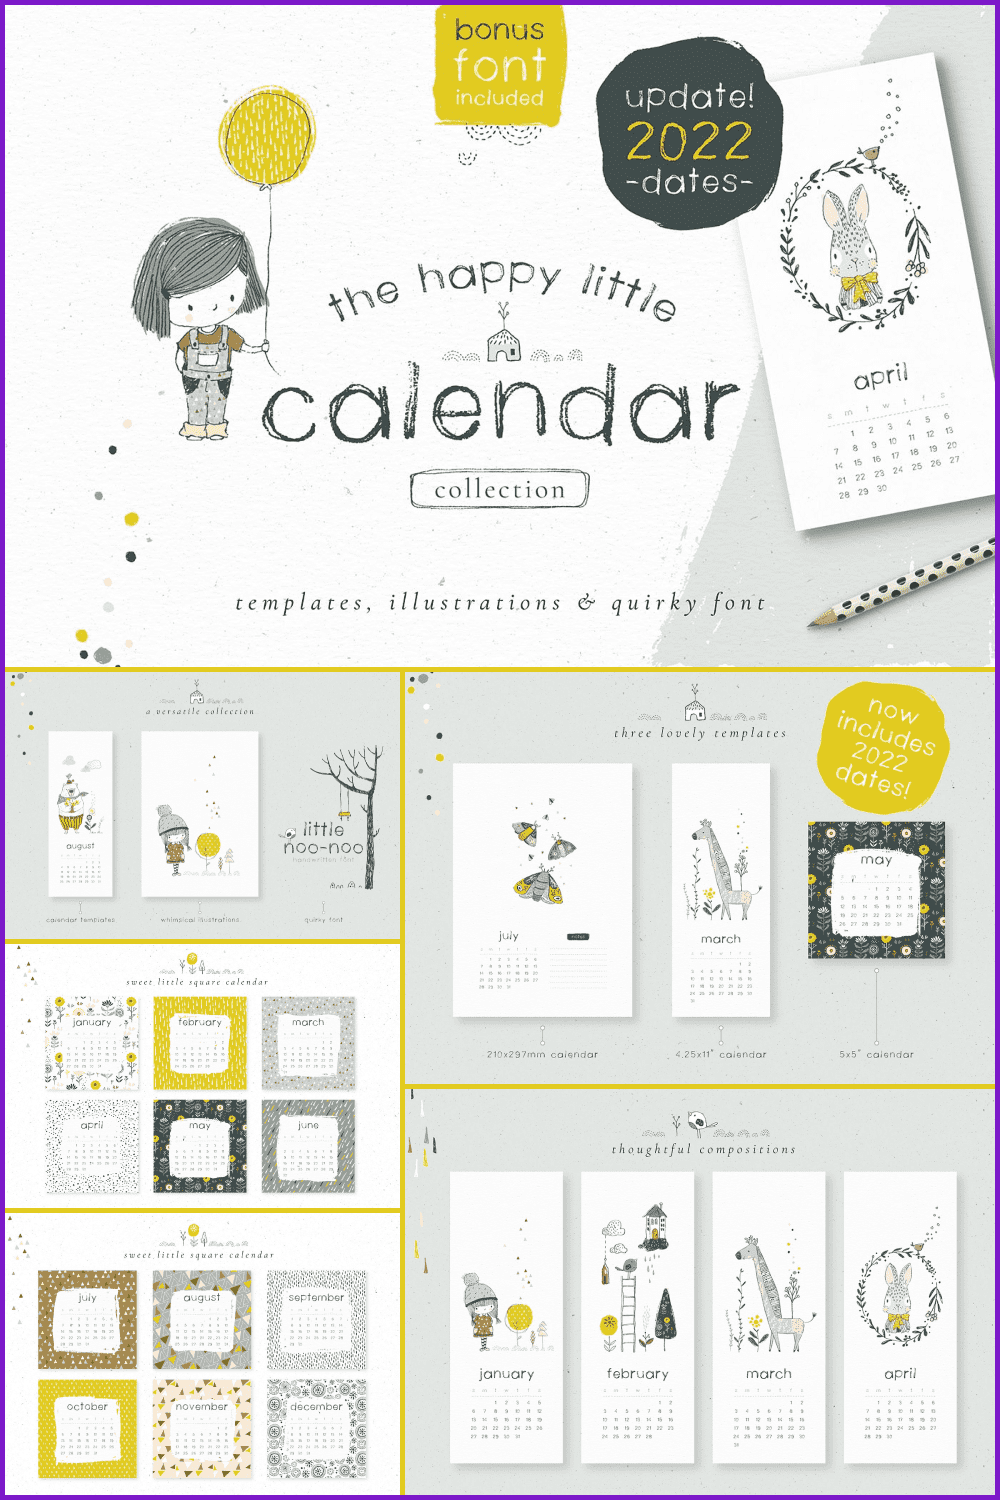 Cute calendar with drawn illustrations.